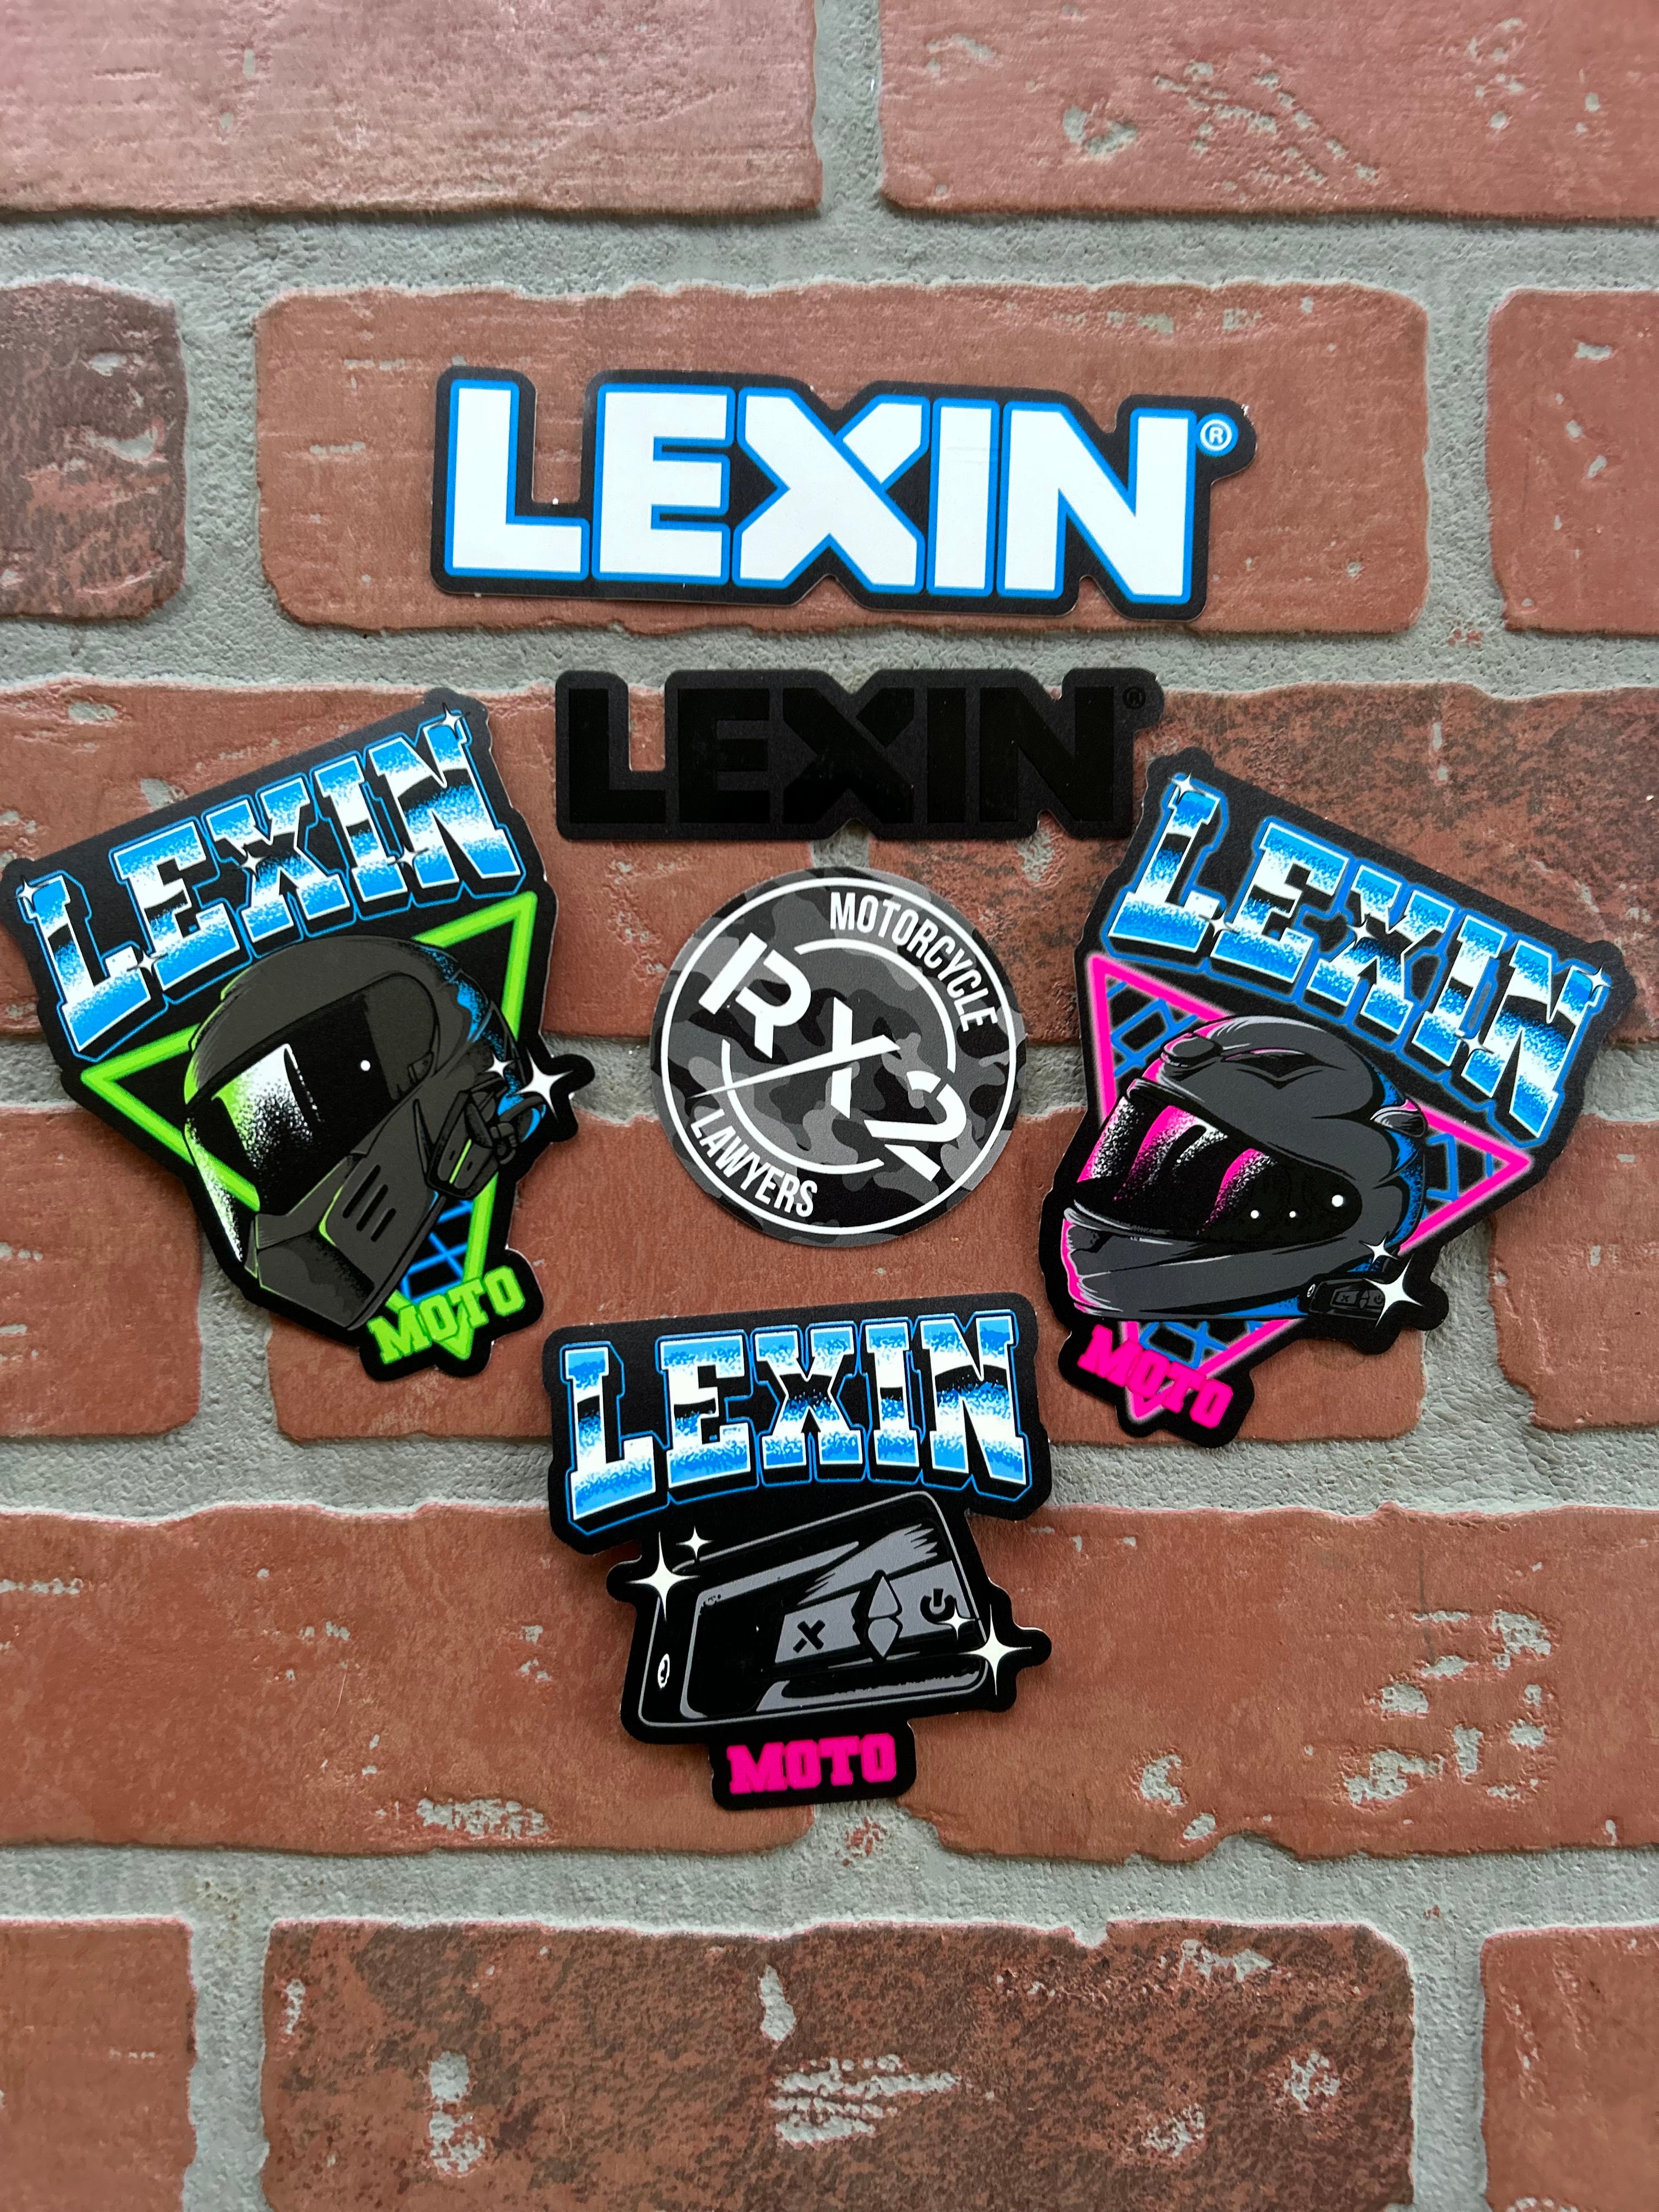 LEXIN Premium Sticker Pack